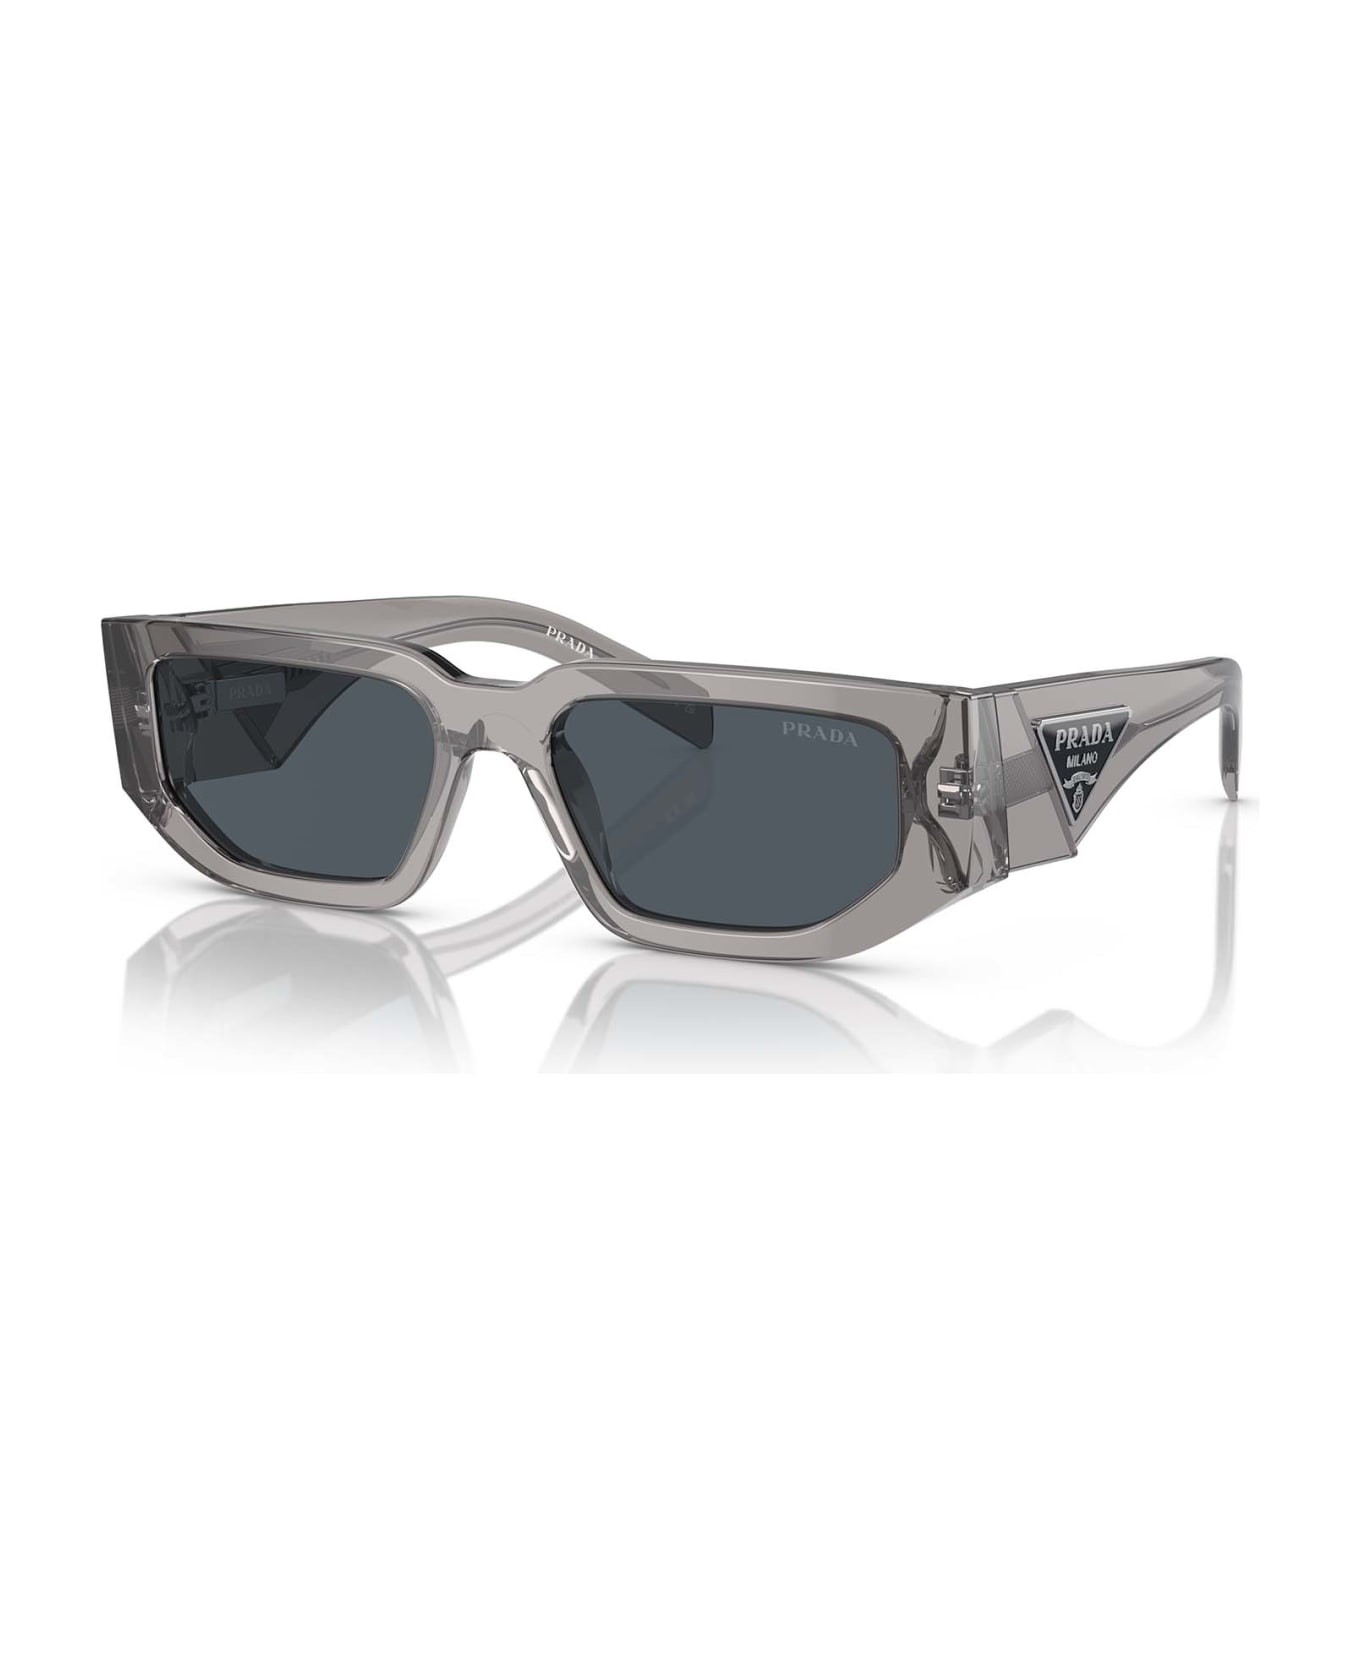 Prada Eyewear Pr 09zs Transparent Asphalt Sunglasses - Transparent Asphalt